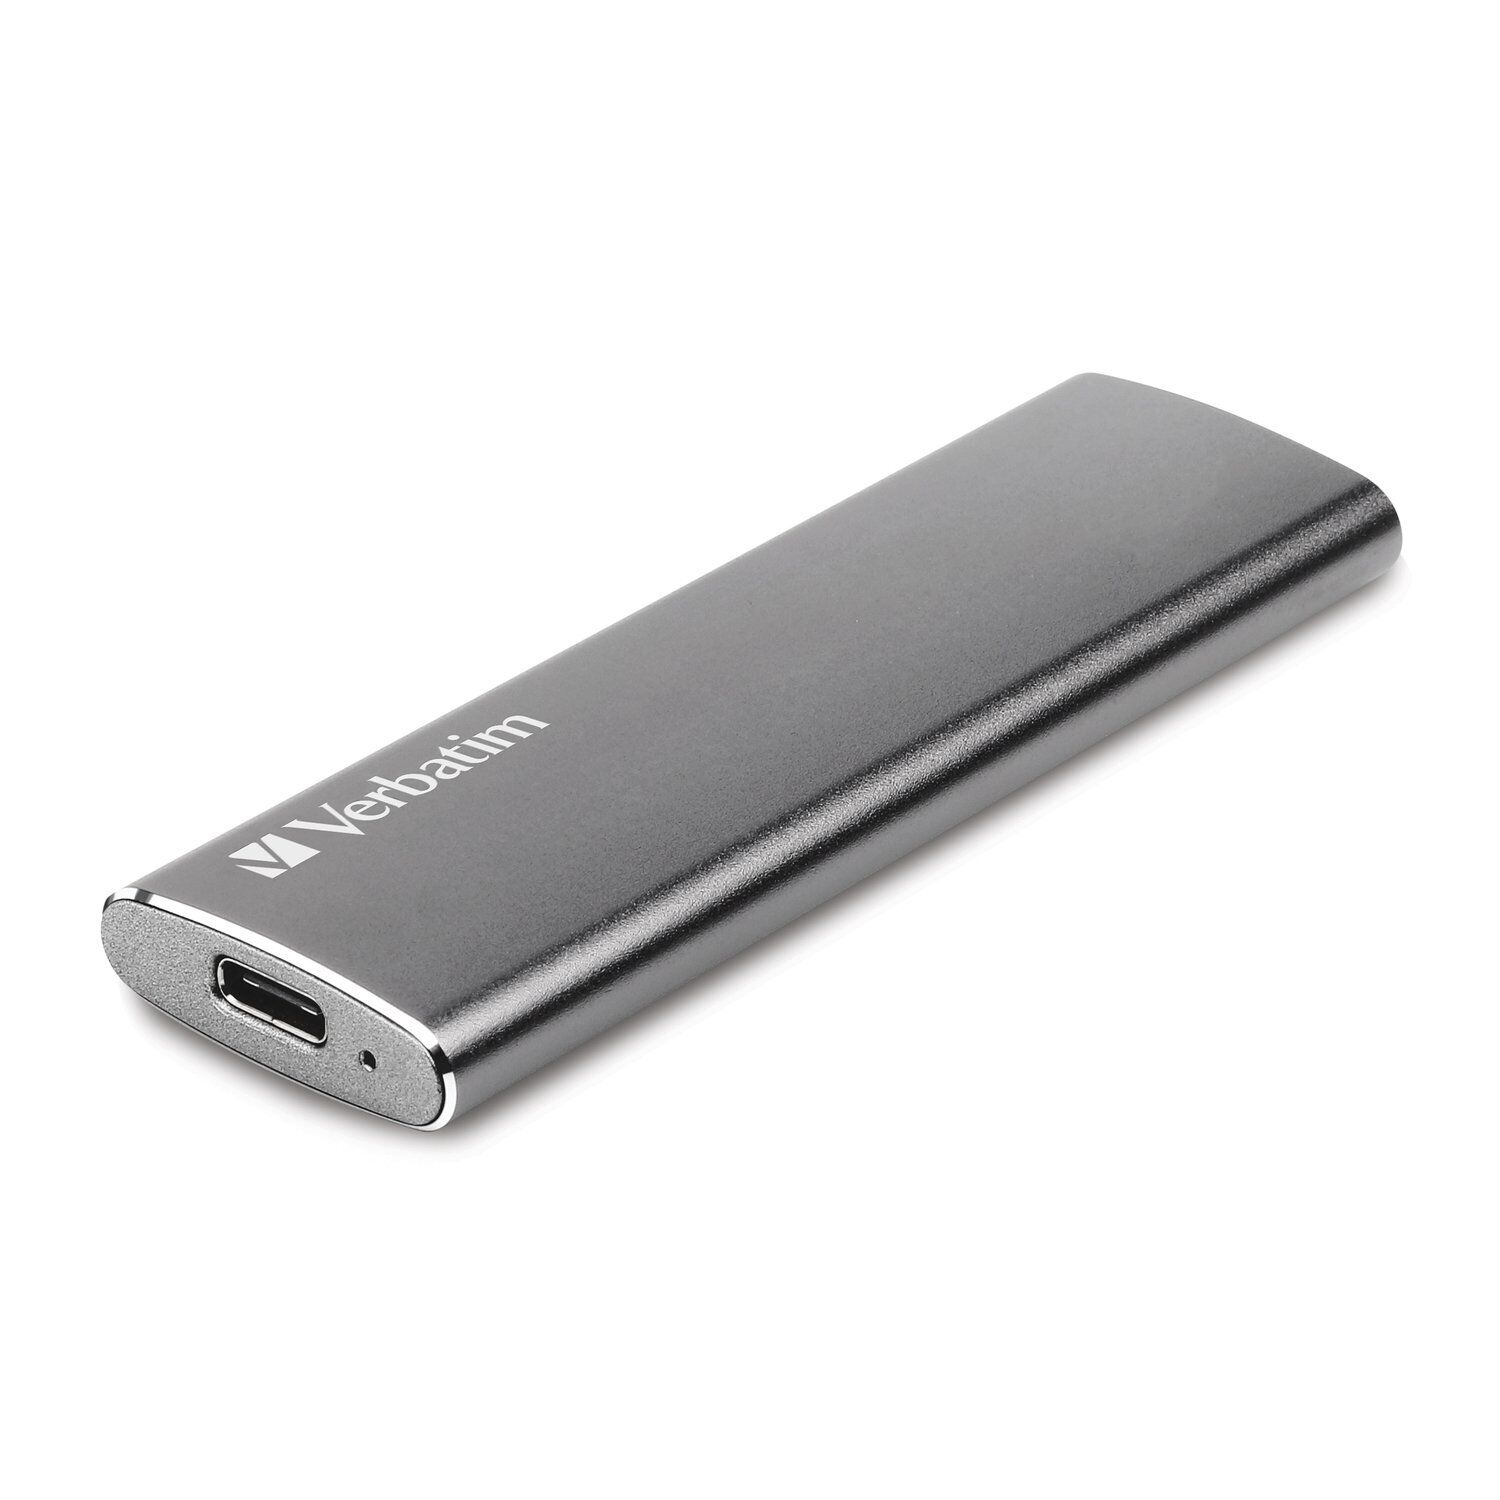 Verbatim 120GB Vx500 External SSD, USB 3.1 Gen 2 - Graphite (47441)